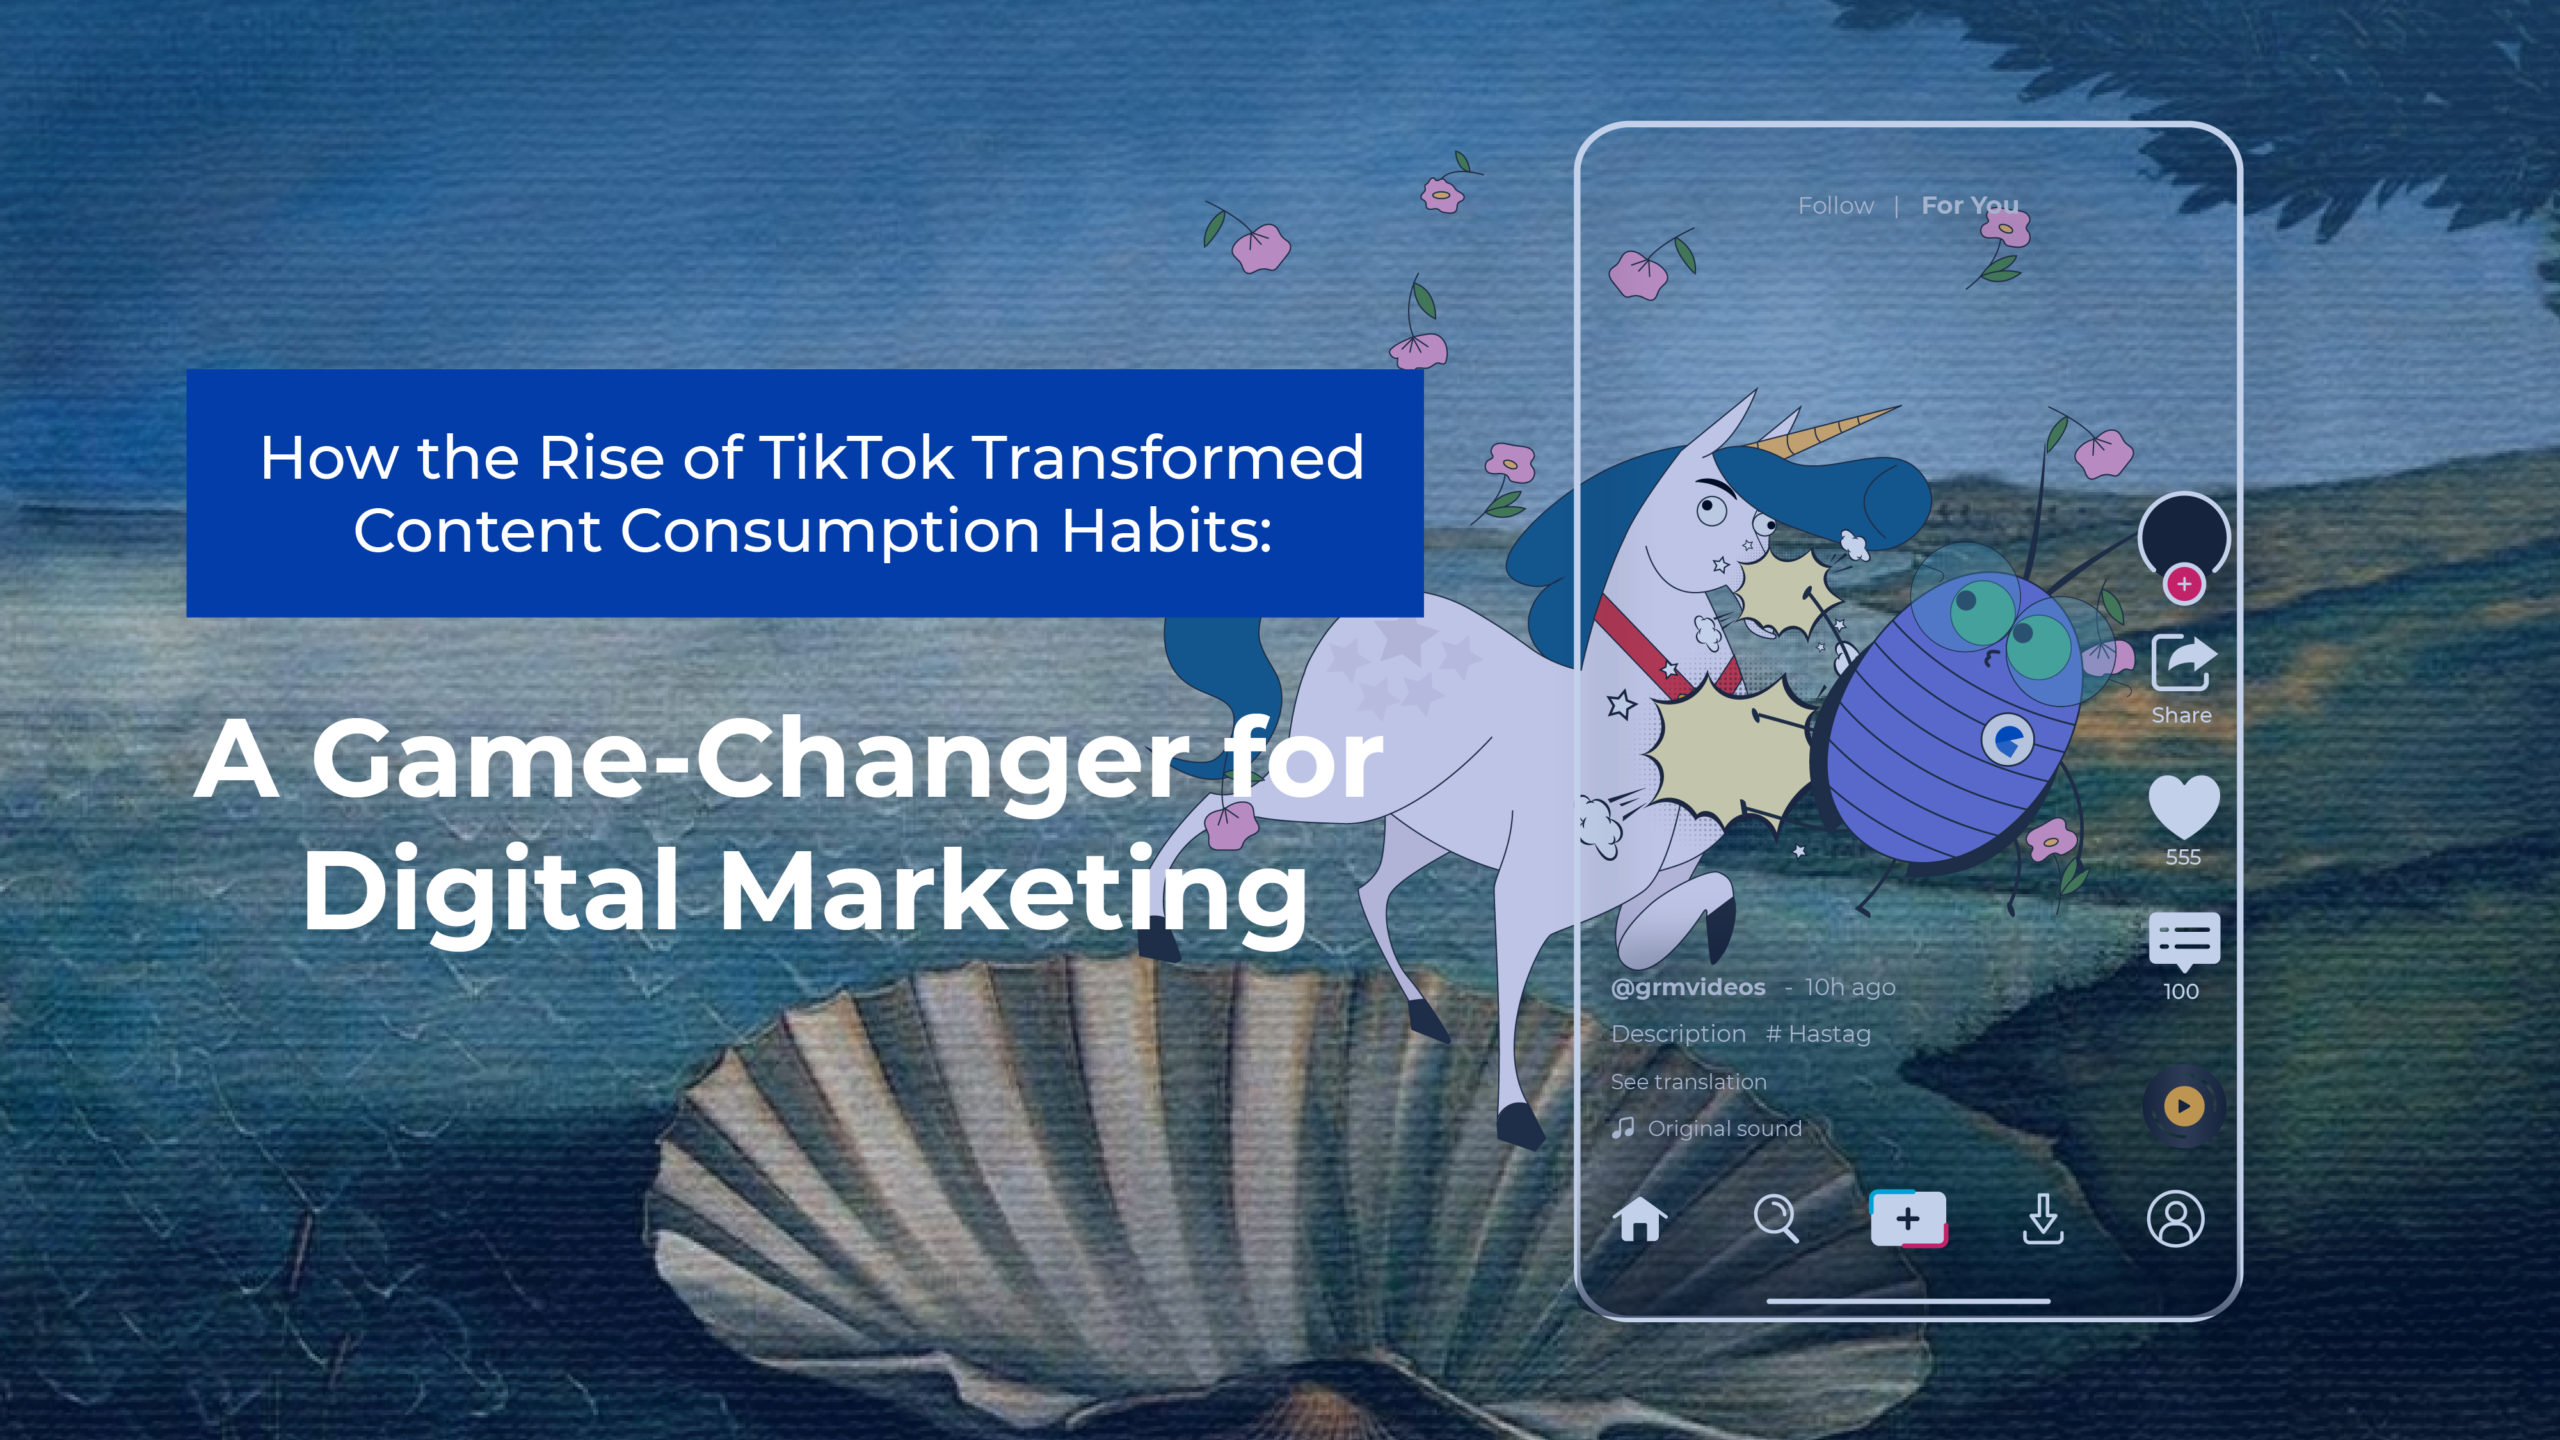 Tiktok A Game Changer for Digital Marketing-01